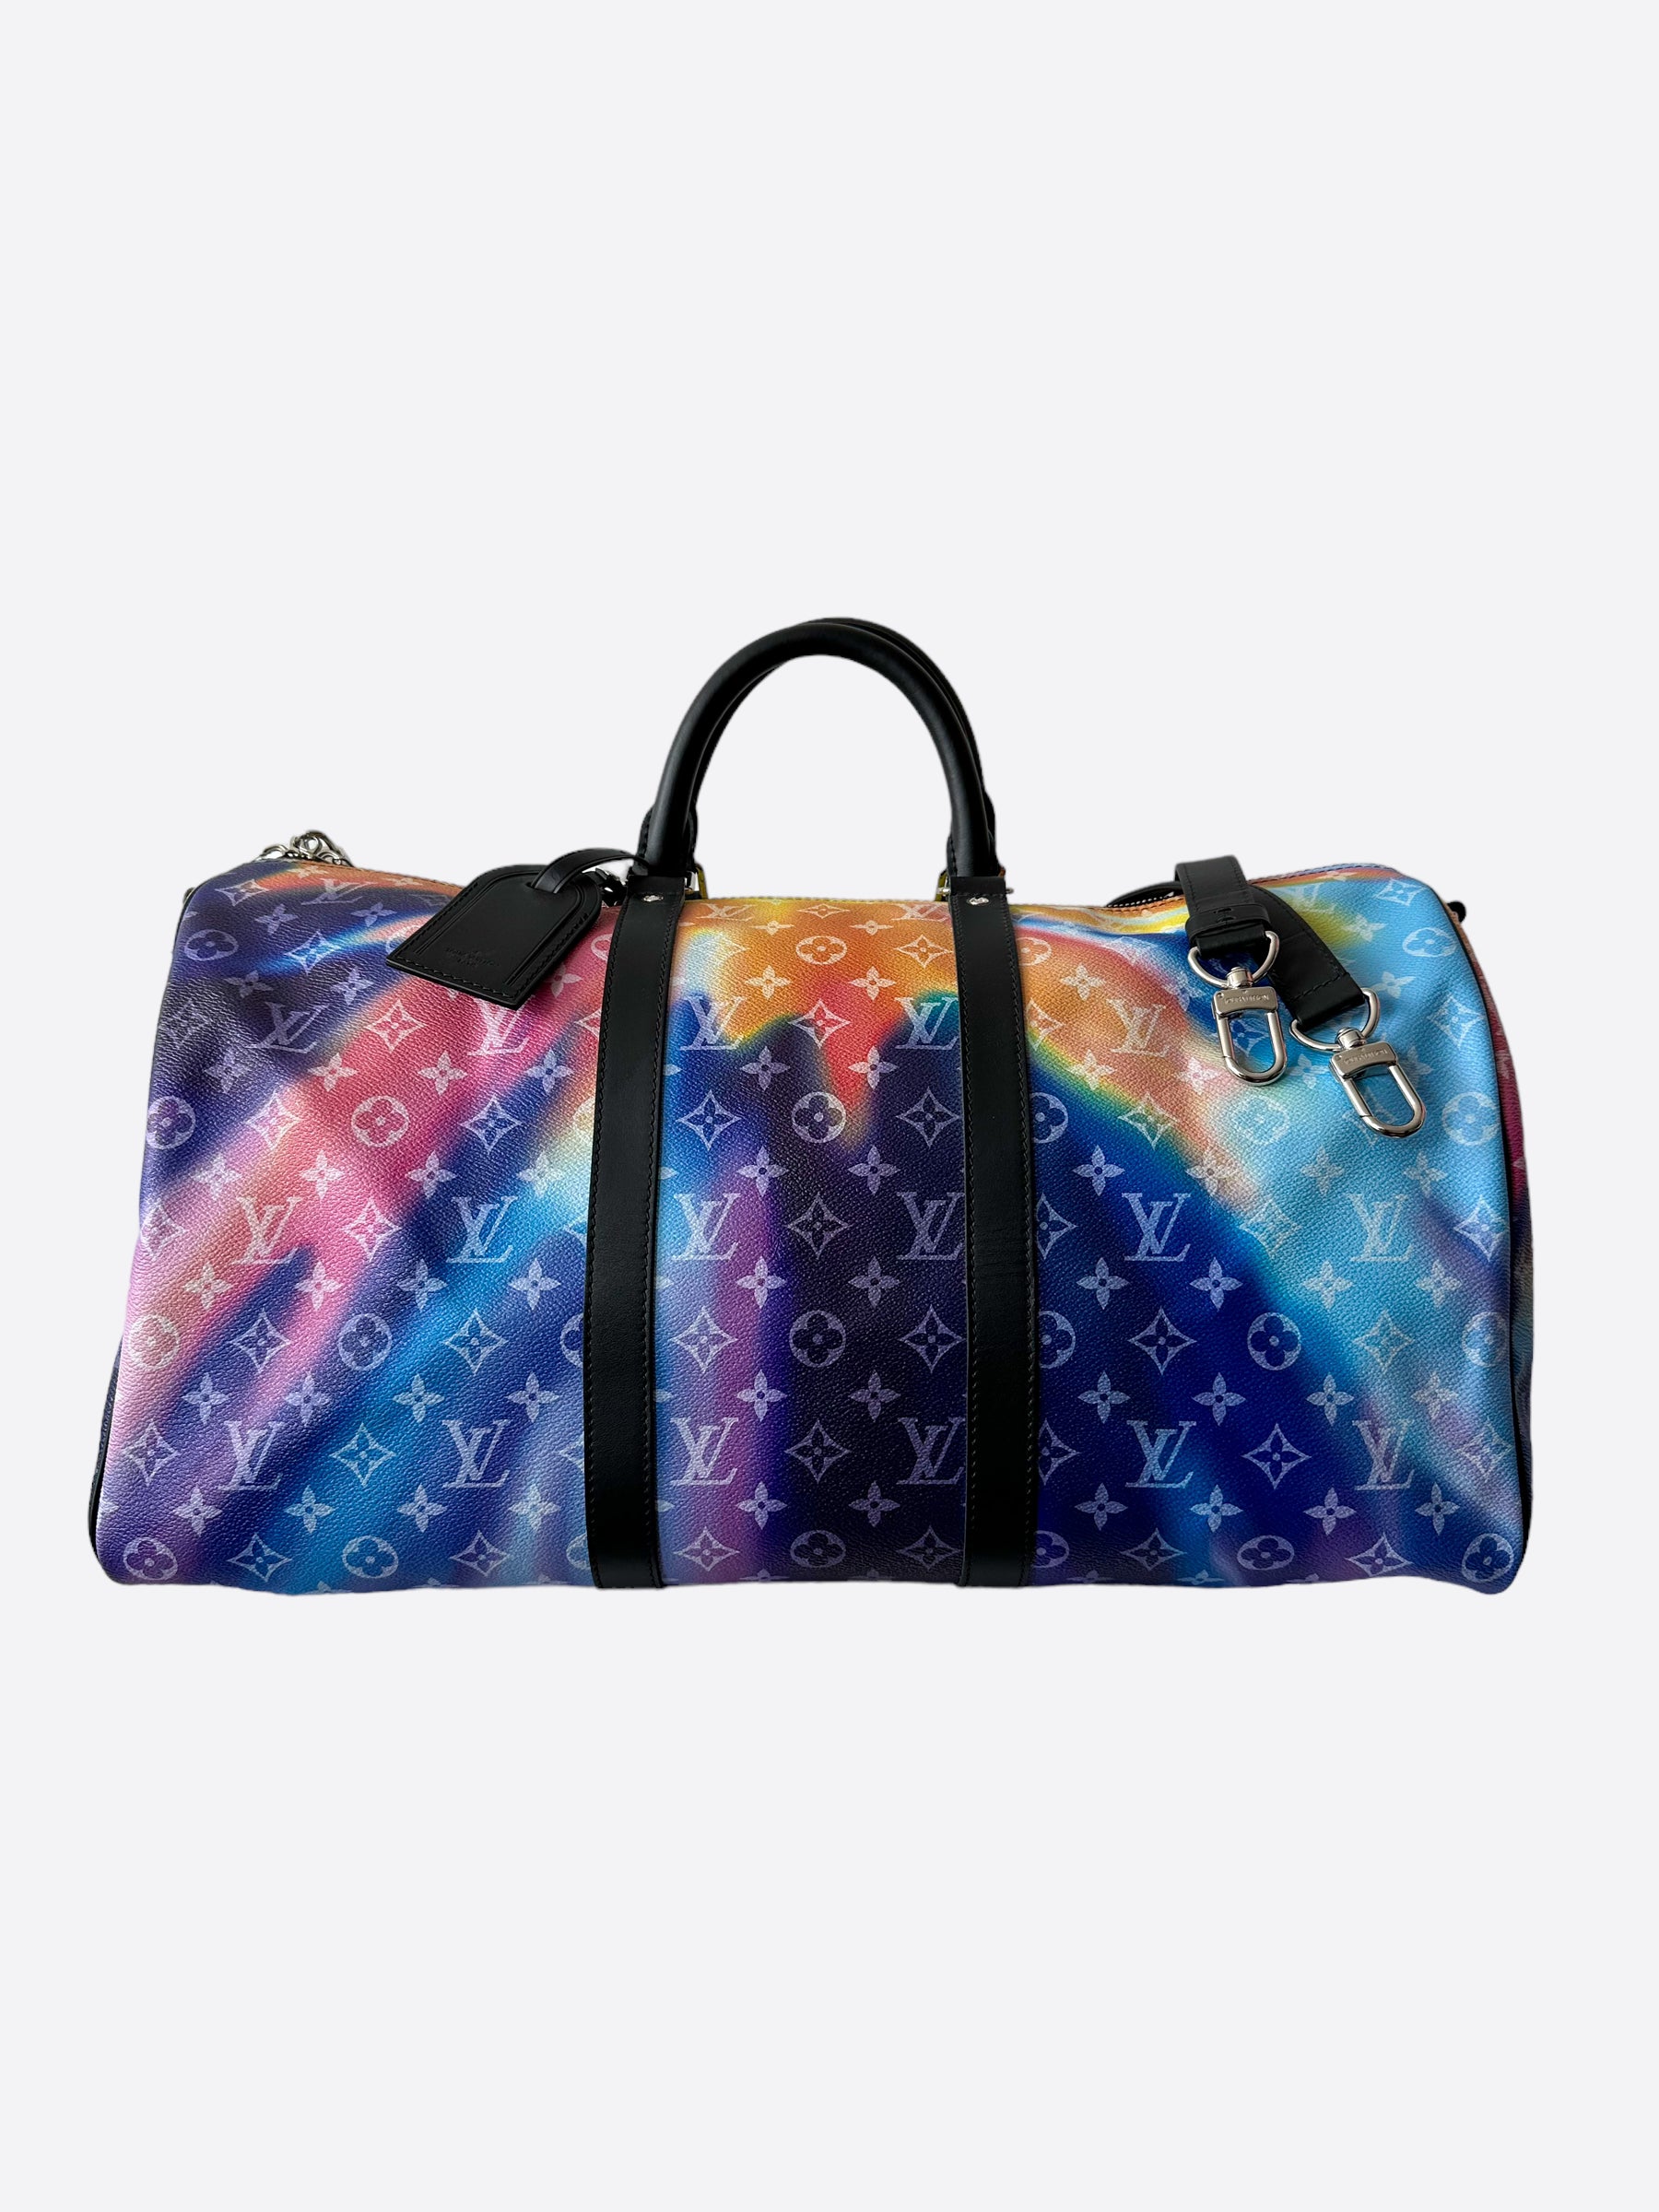 colorful louis vuitton duffle bag